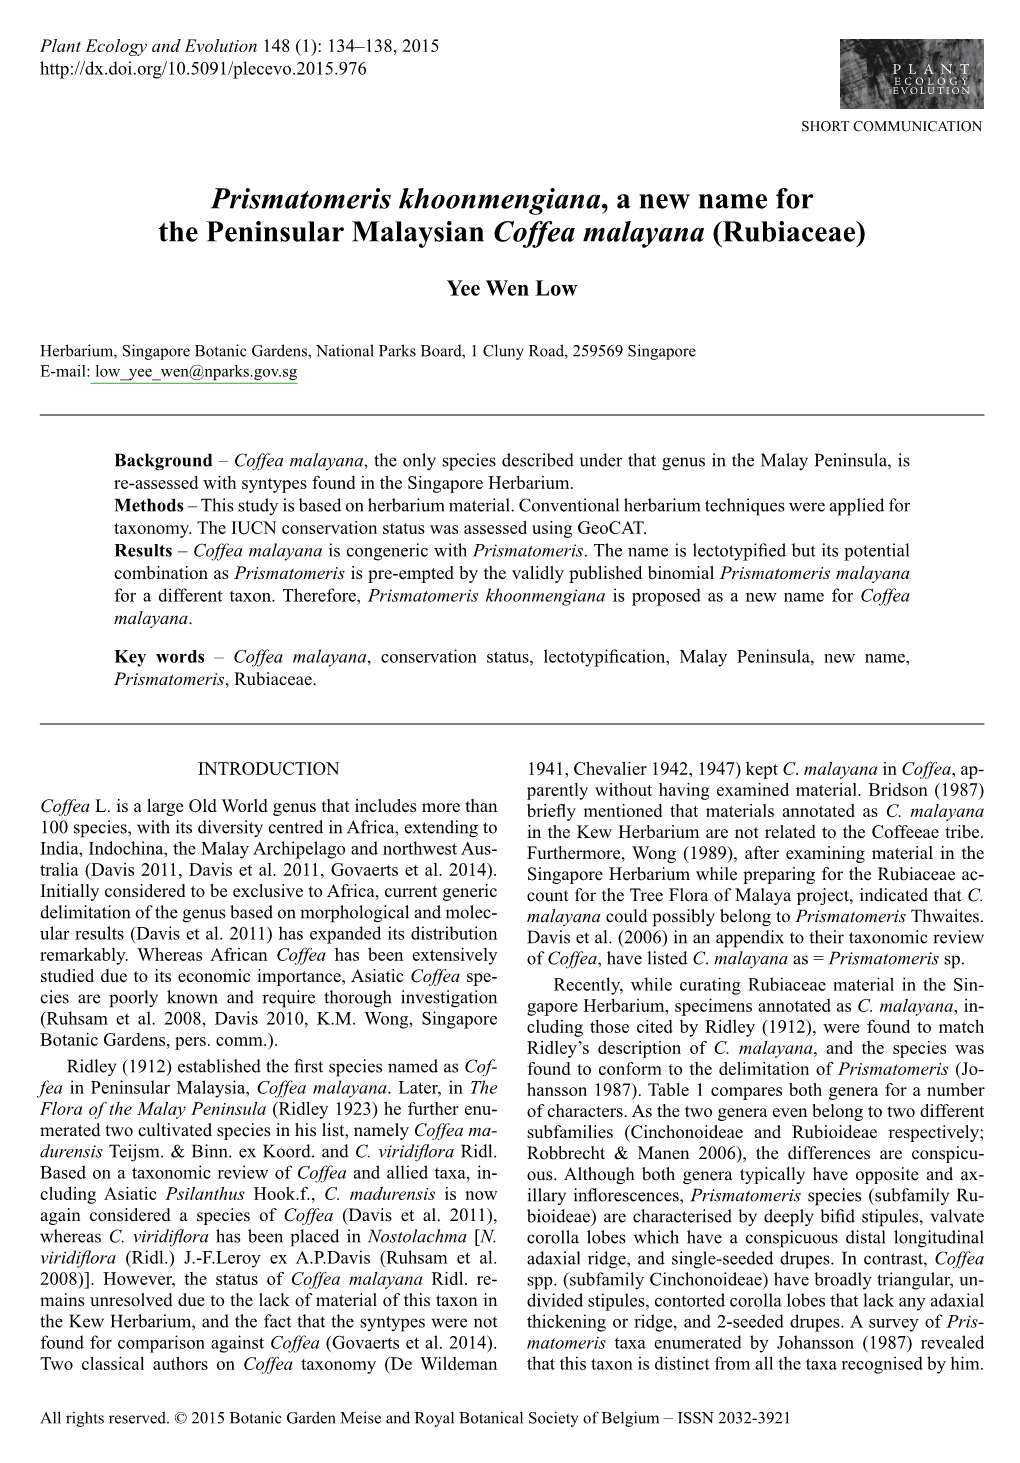 &lt;I&gt;Coffea Malayana&lt;/I&gt; (Rubi